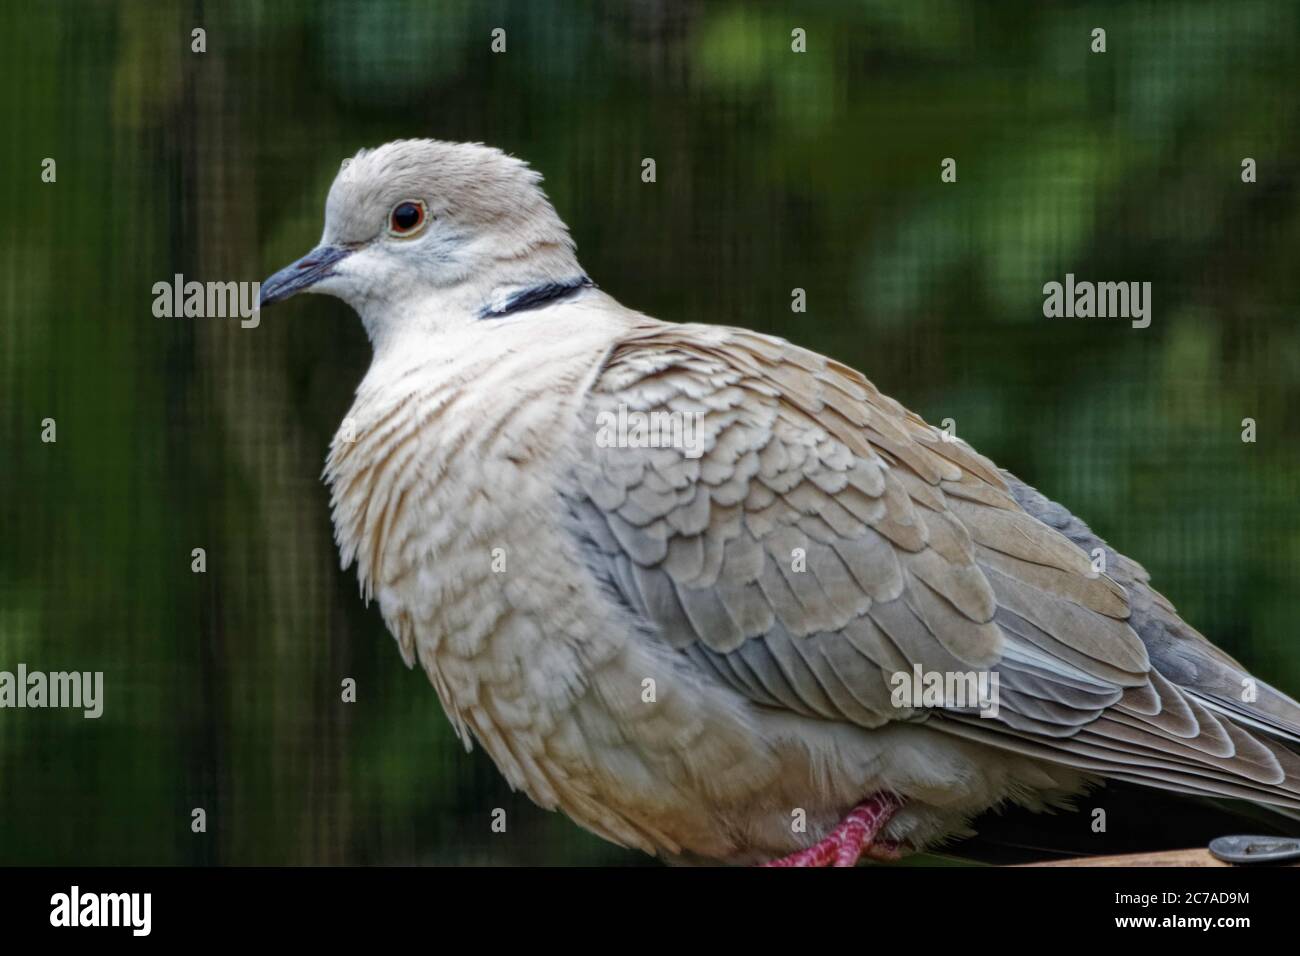 Ring-necked dove - Wikipedia